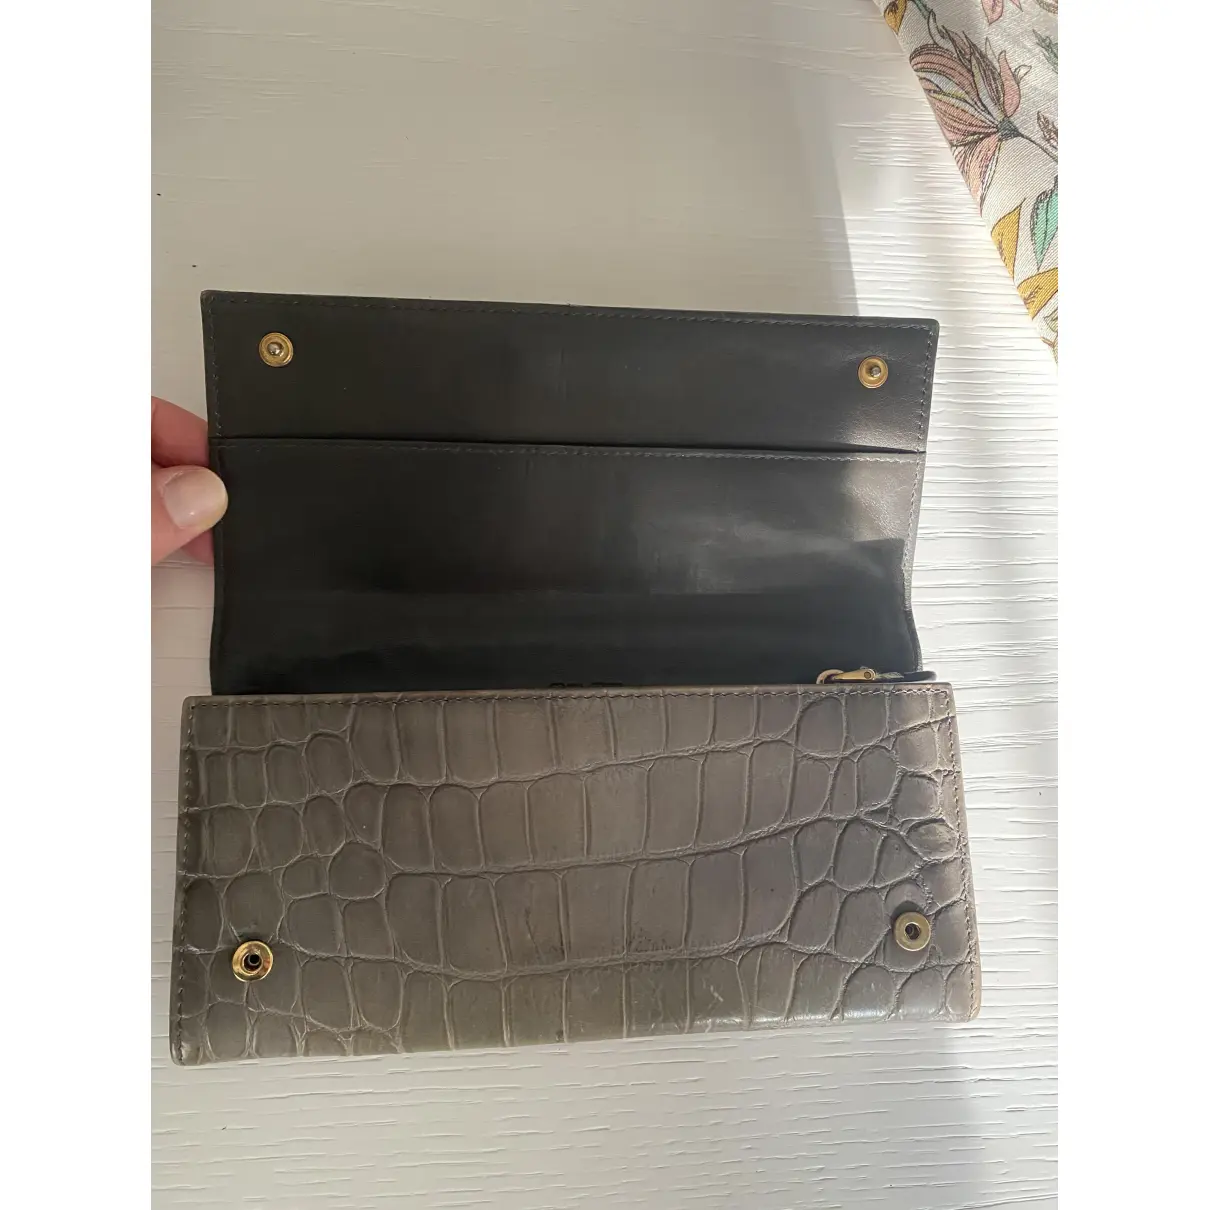 Leather wallet Miu Miu